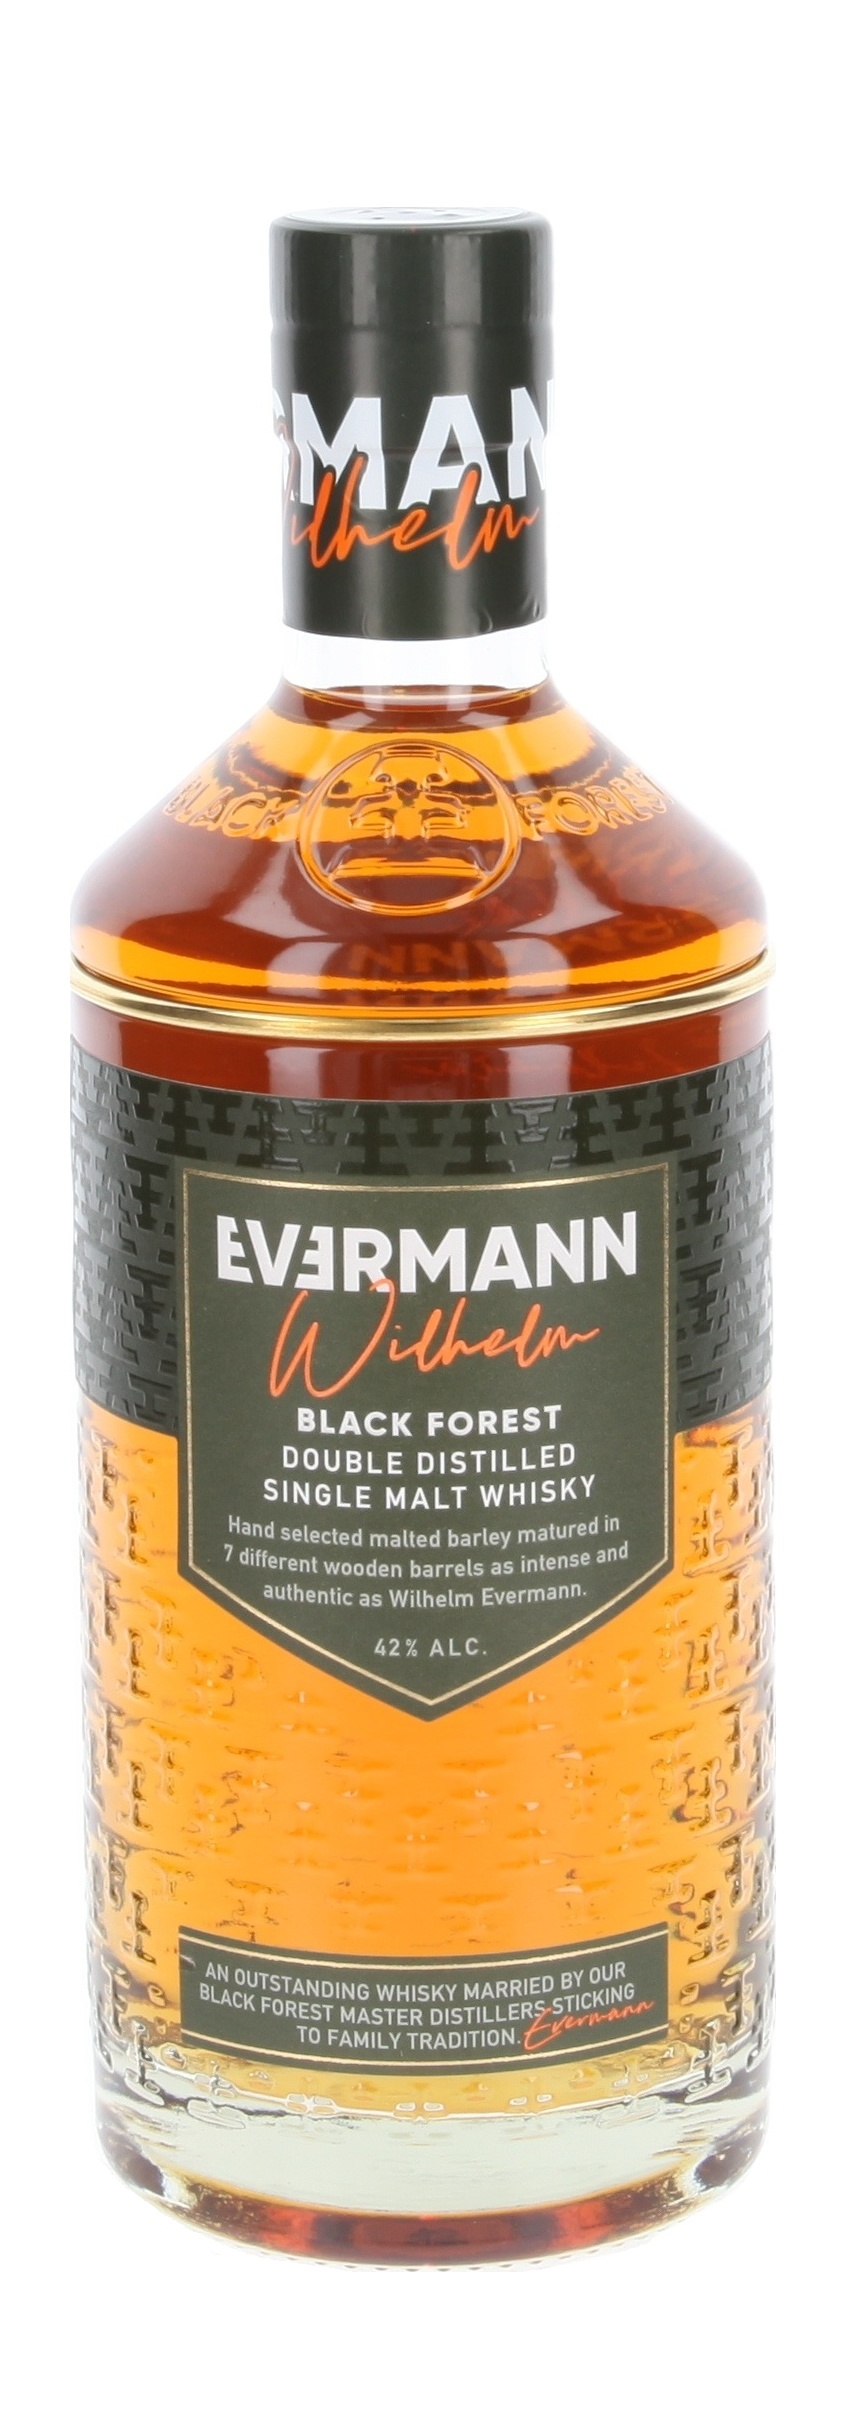 Wilhelm To the Whisky online Malt Whisky.de » Single | Evermann store